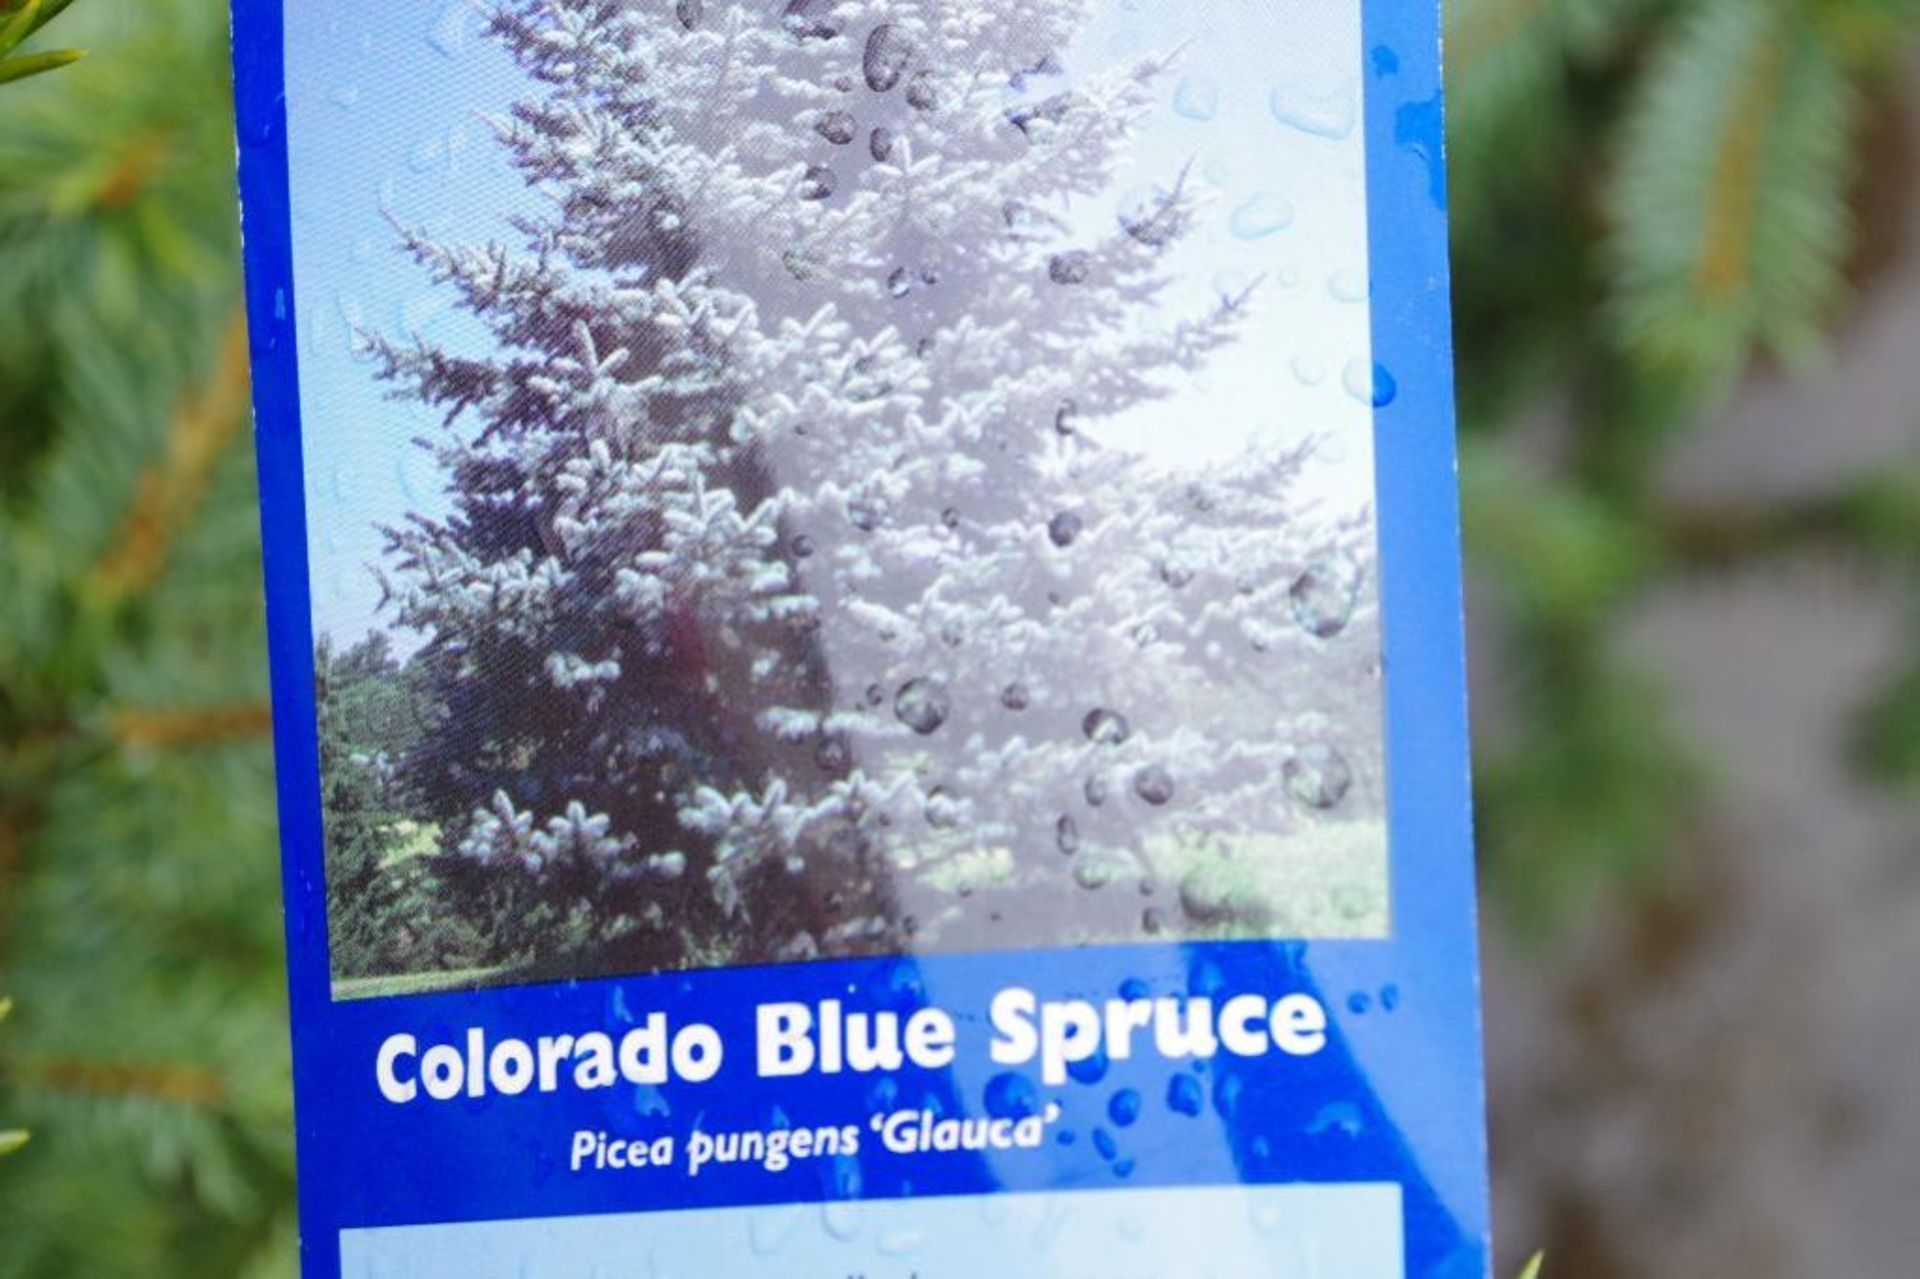 Colorado Blue Spruce - Image 2 of 3